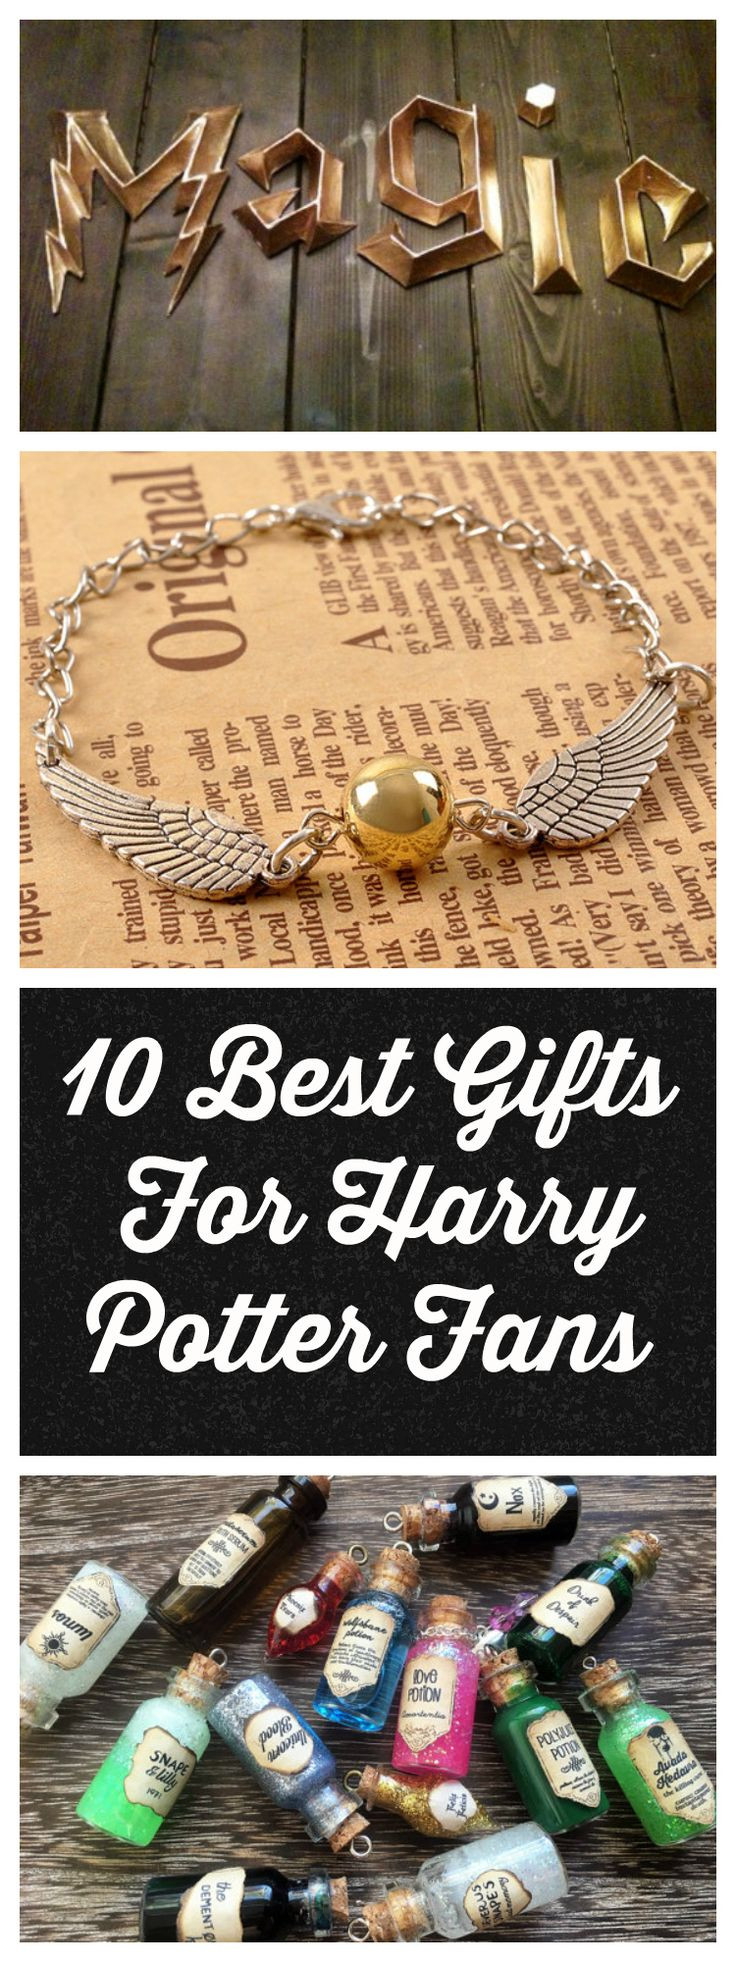 Harry Potter Christmas Gift Ideas
 25 best ideas about Harry potter ts on Pinterest